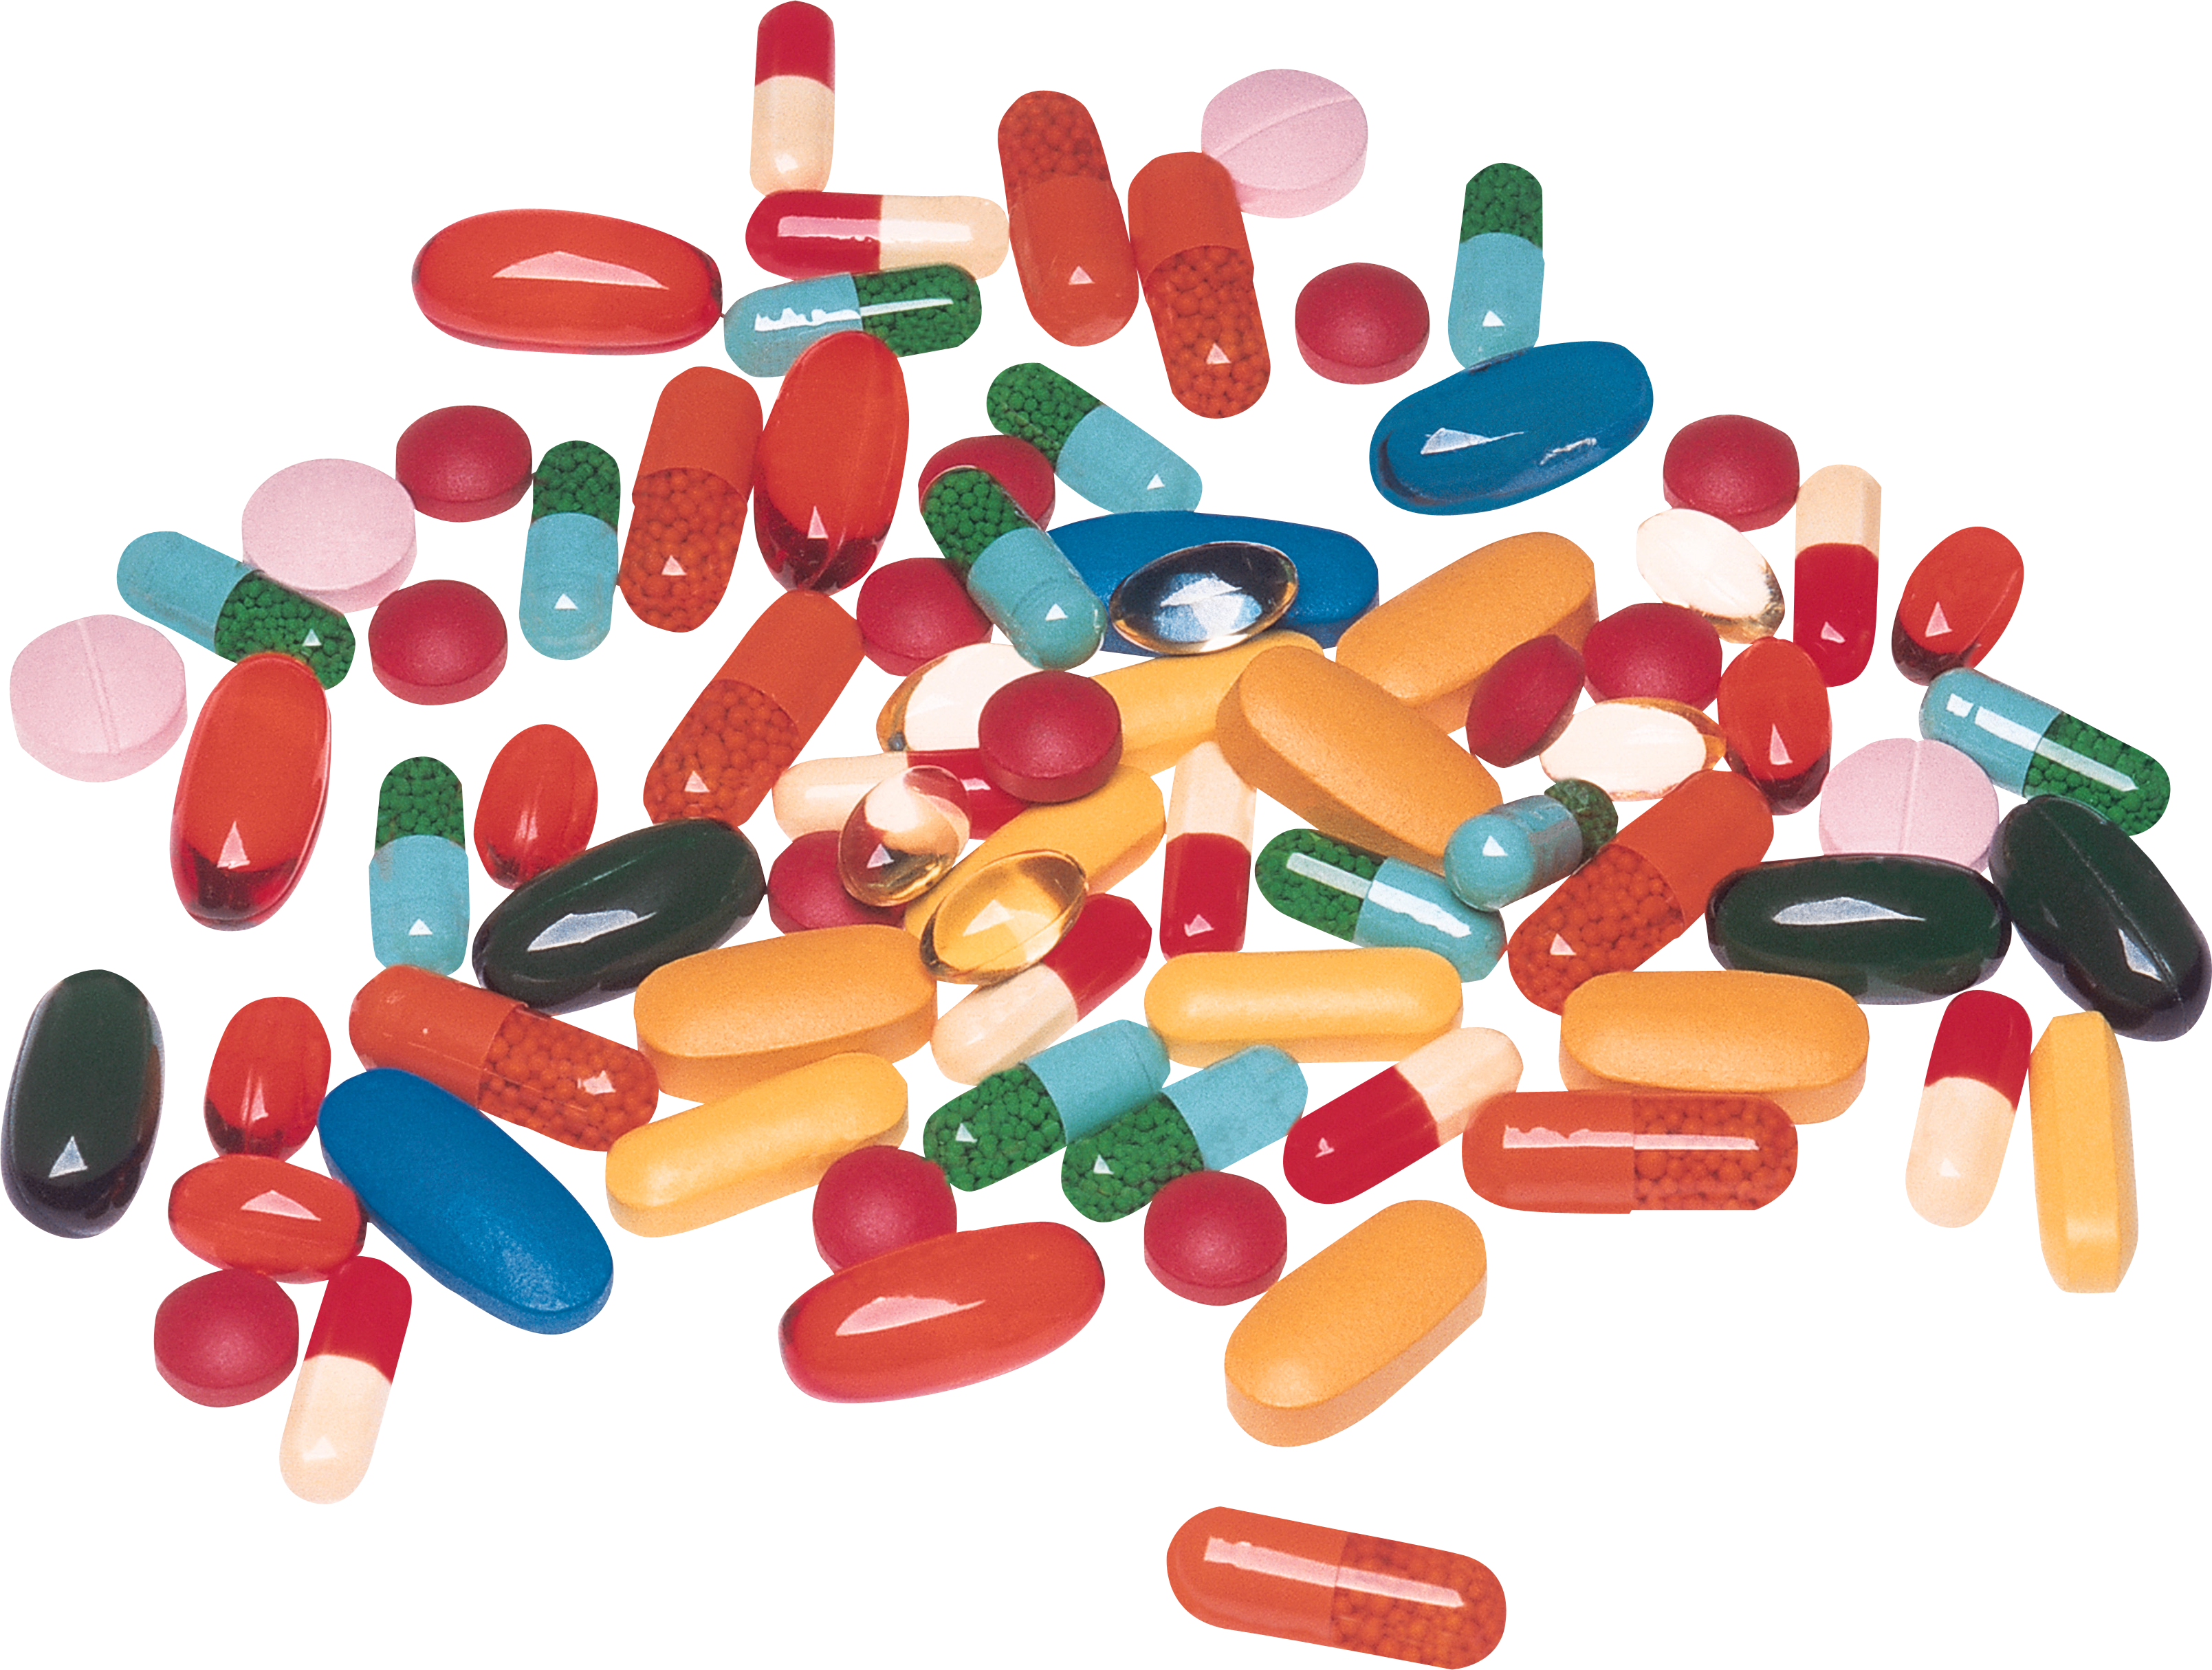 Assorted Medication Pills